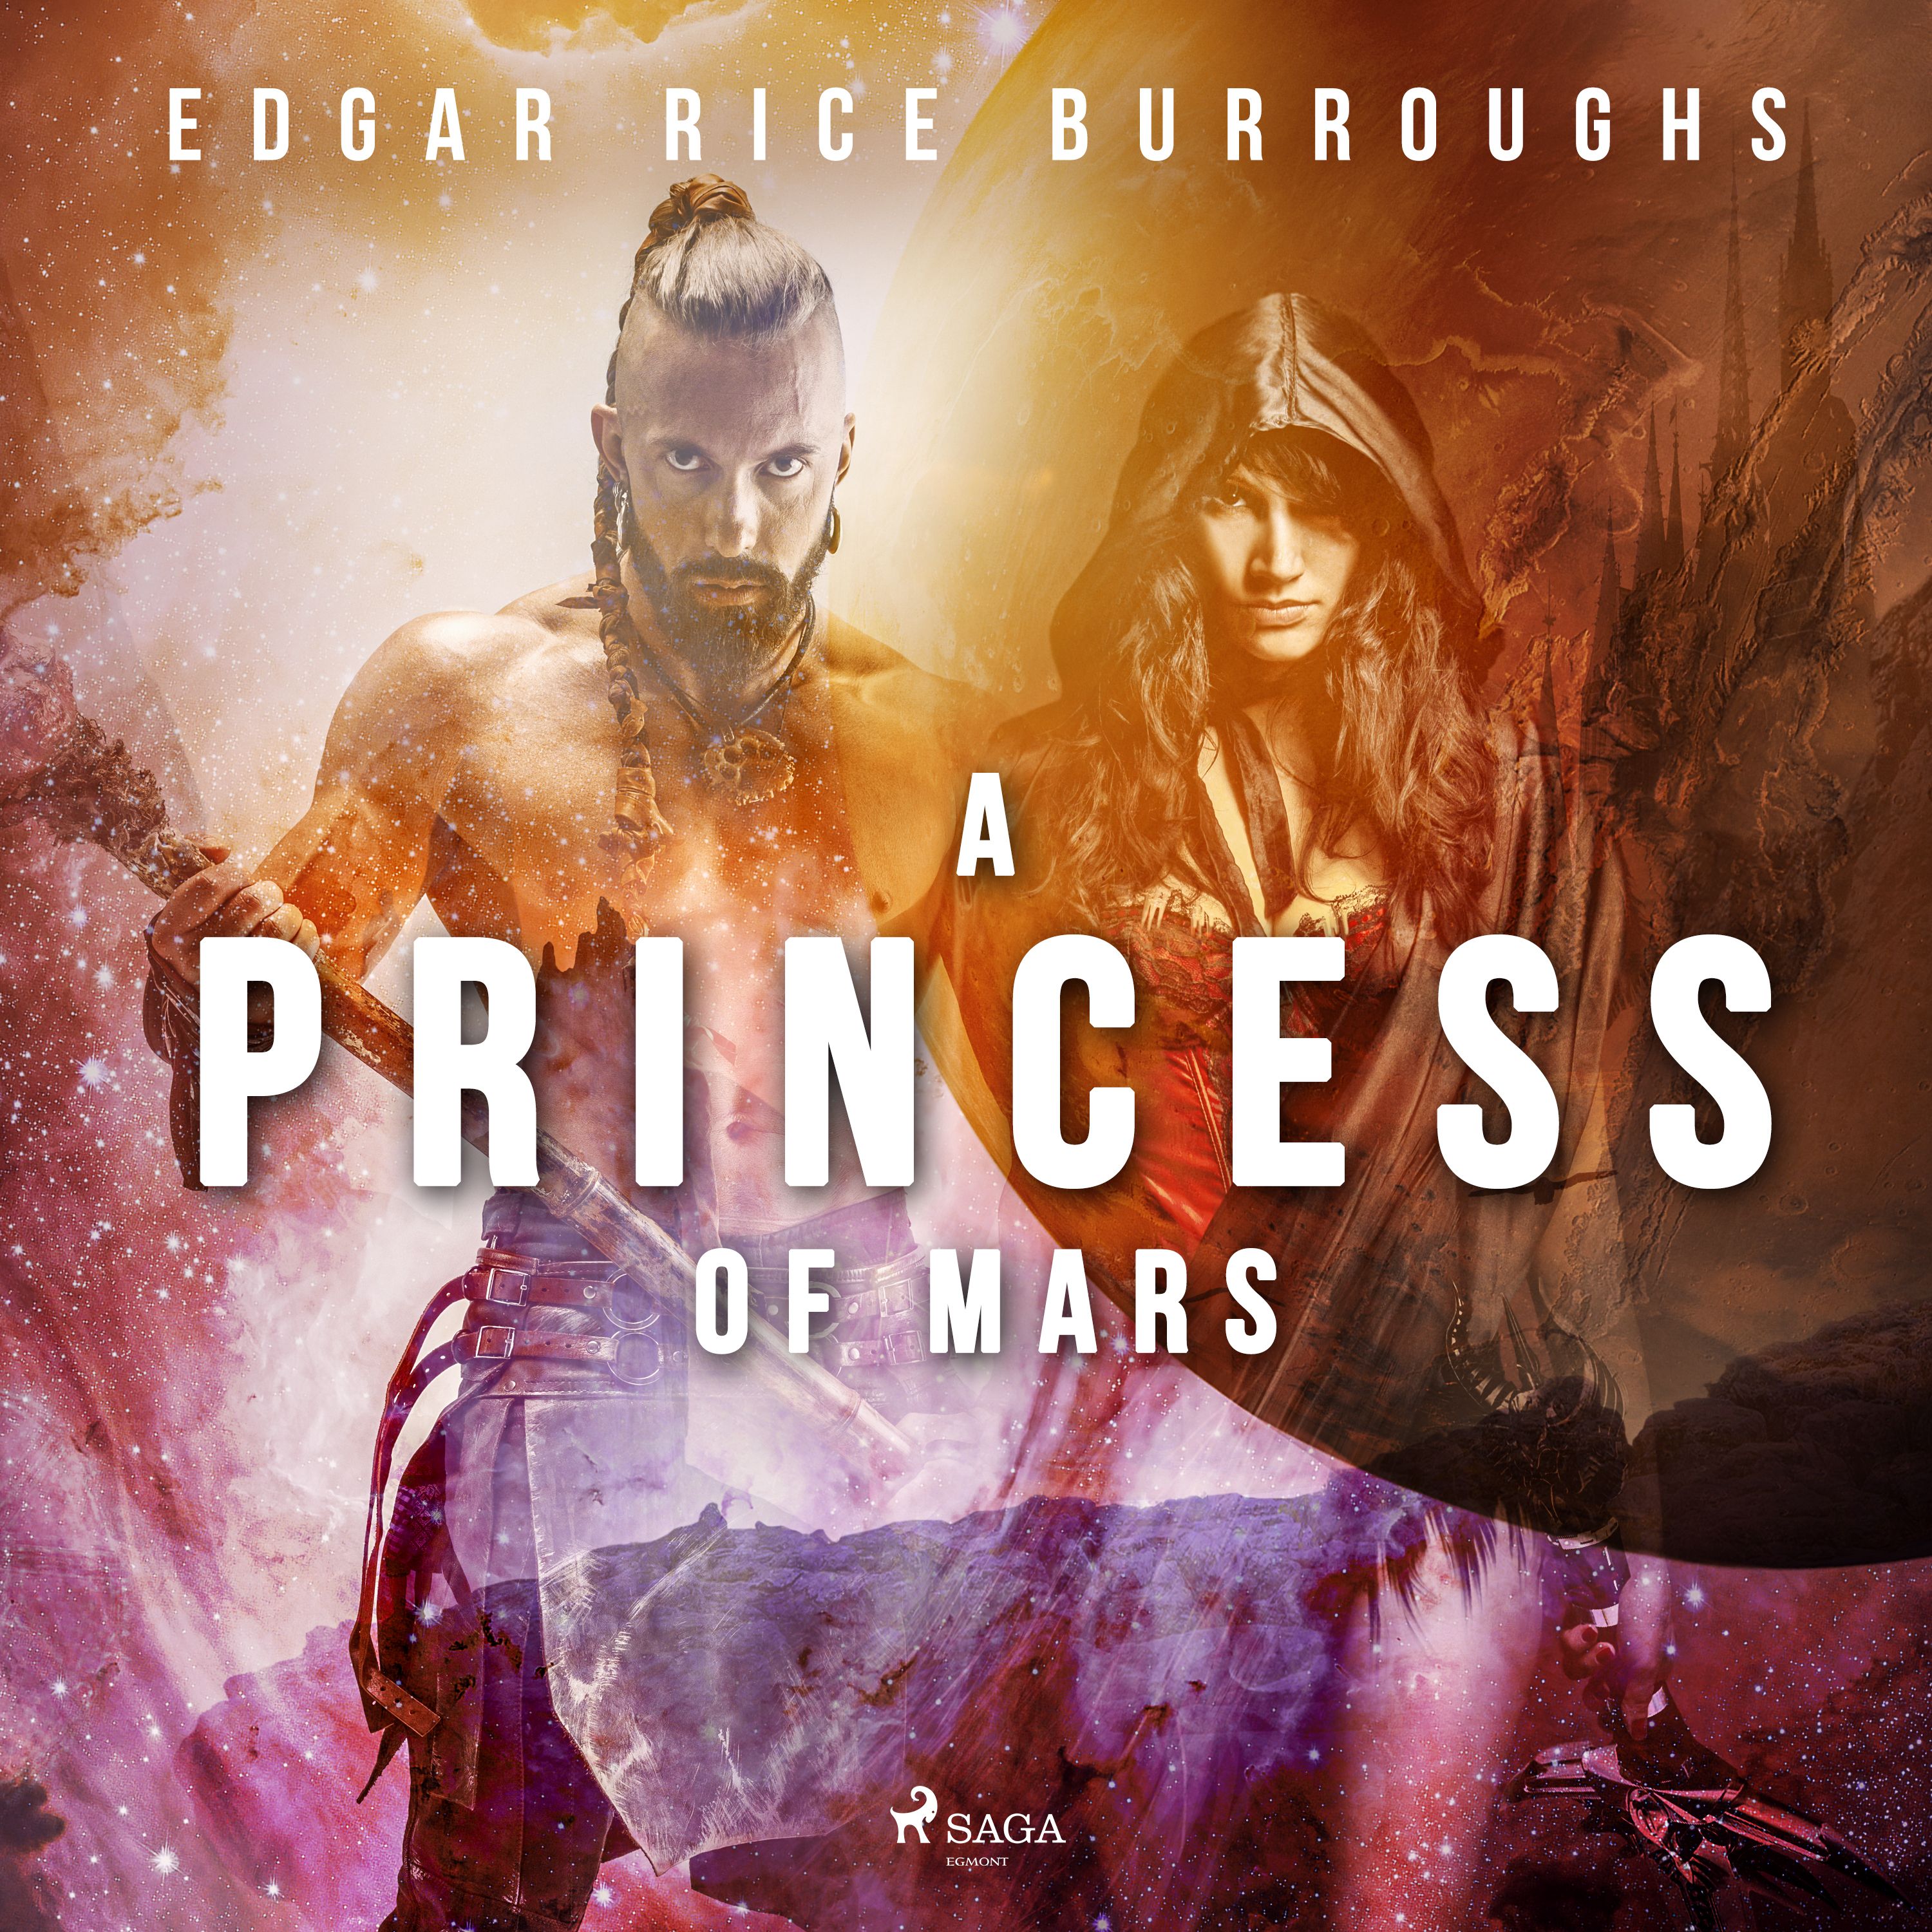 A Princess of Mars, lydbog af Edgar Rice Burroughs